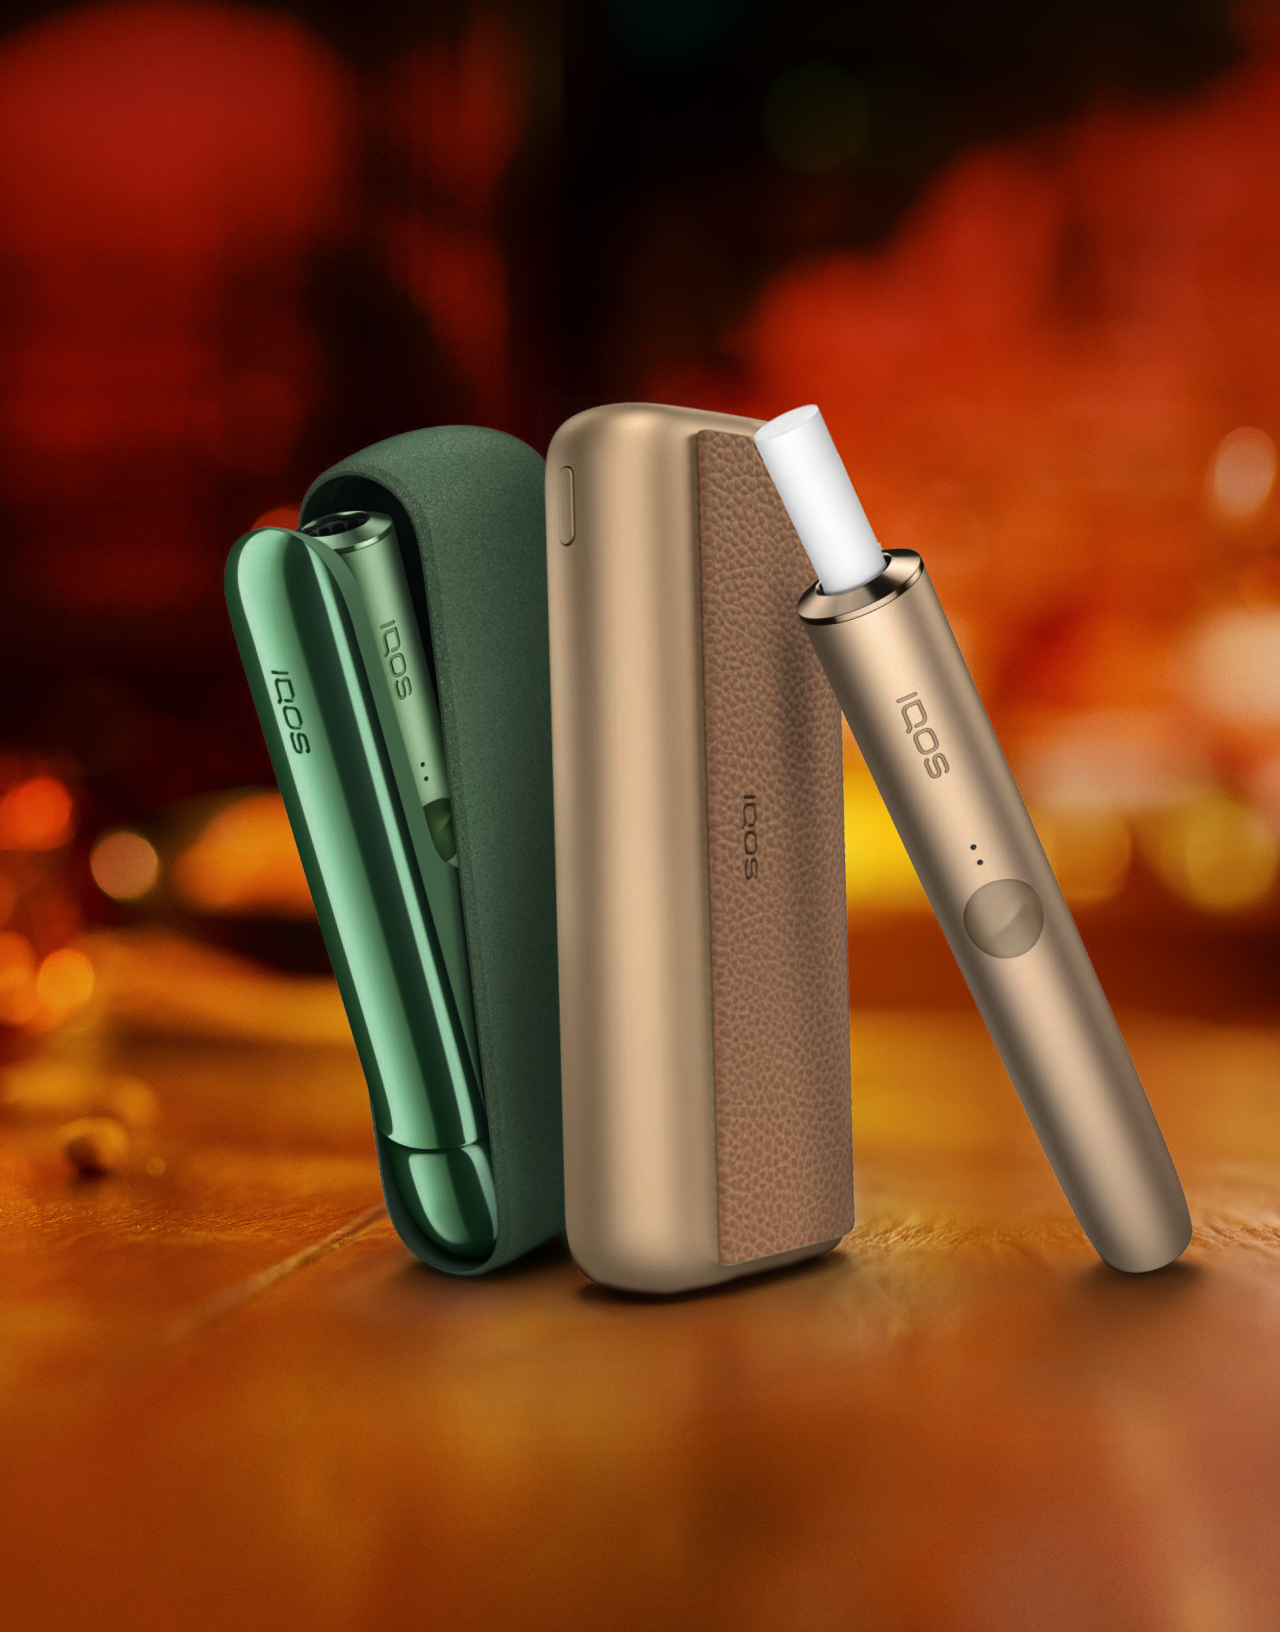 One green IQOS ILUMA device and one gold IQOS ILUMA device upright against a blurred orange/black background.